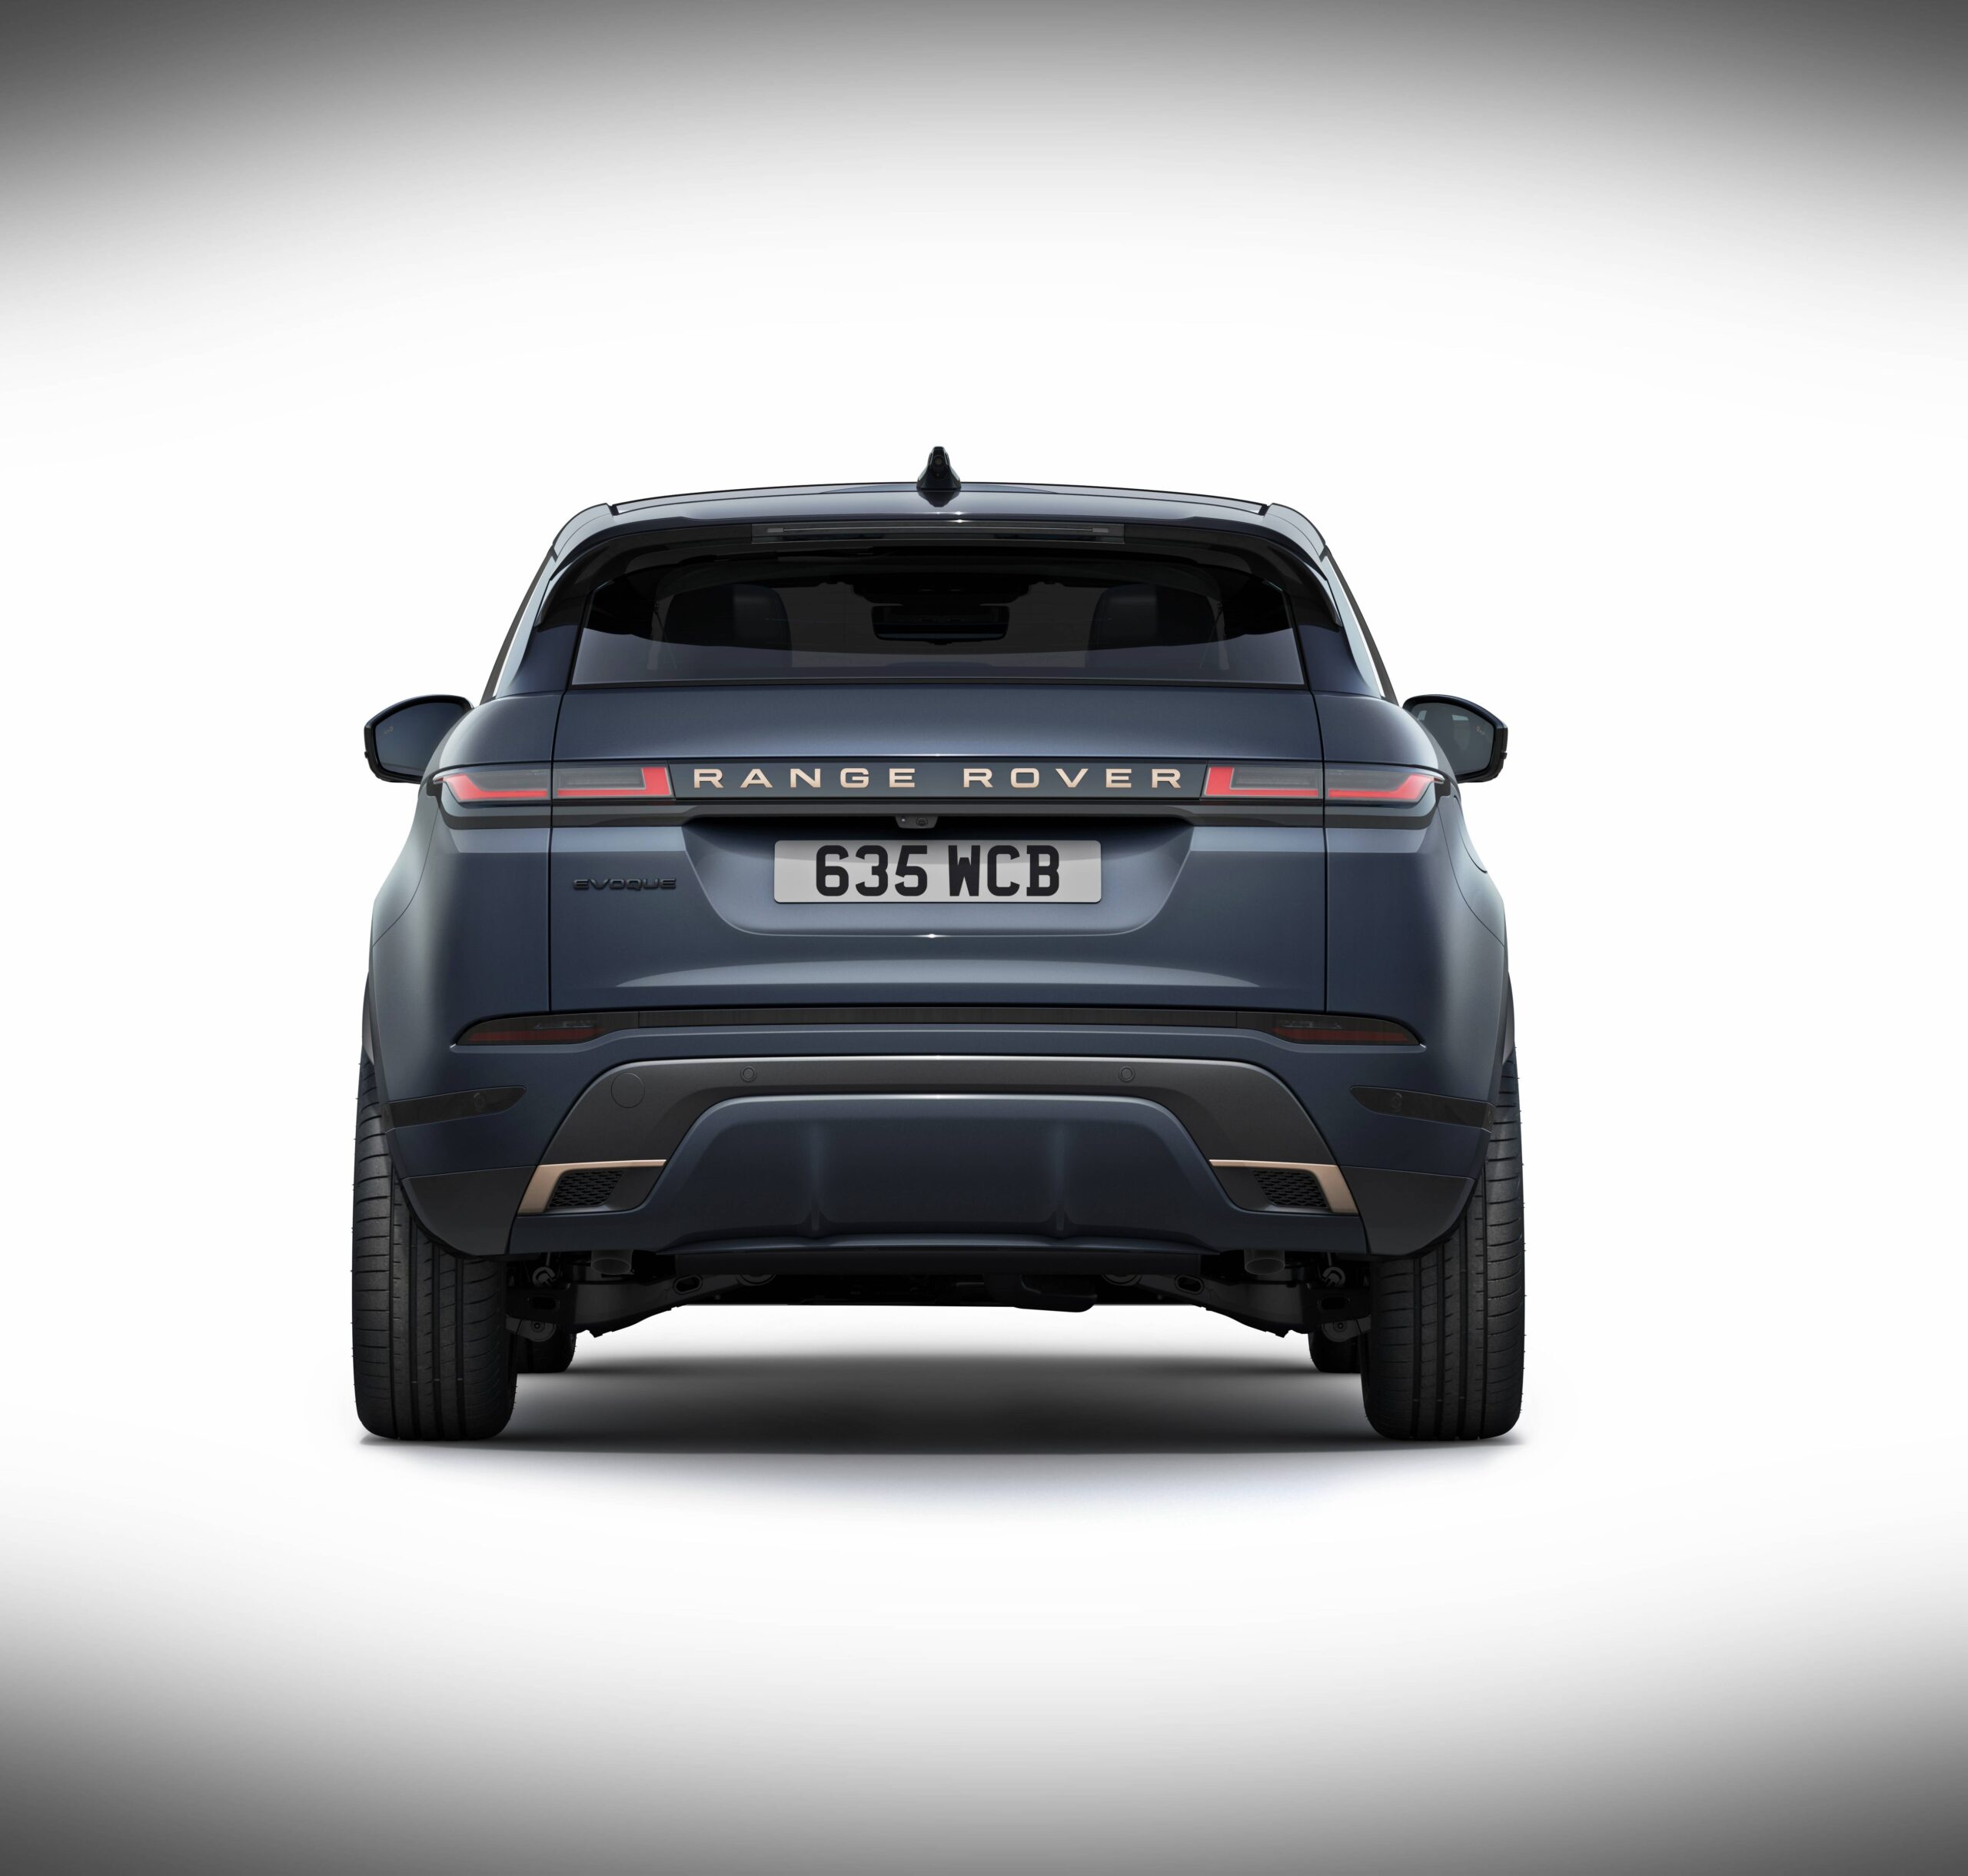 2024 Range Rover Evoque